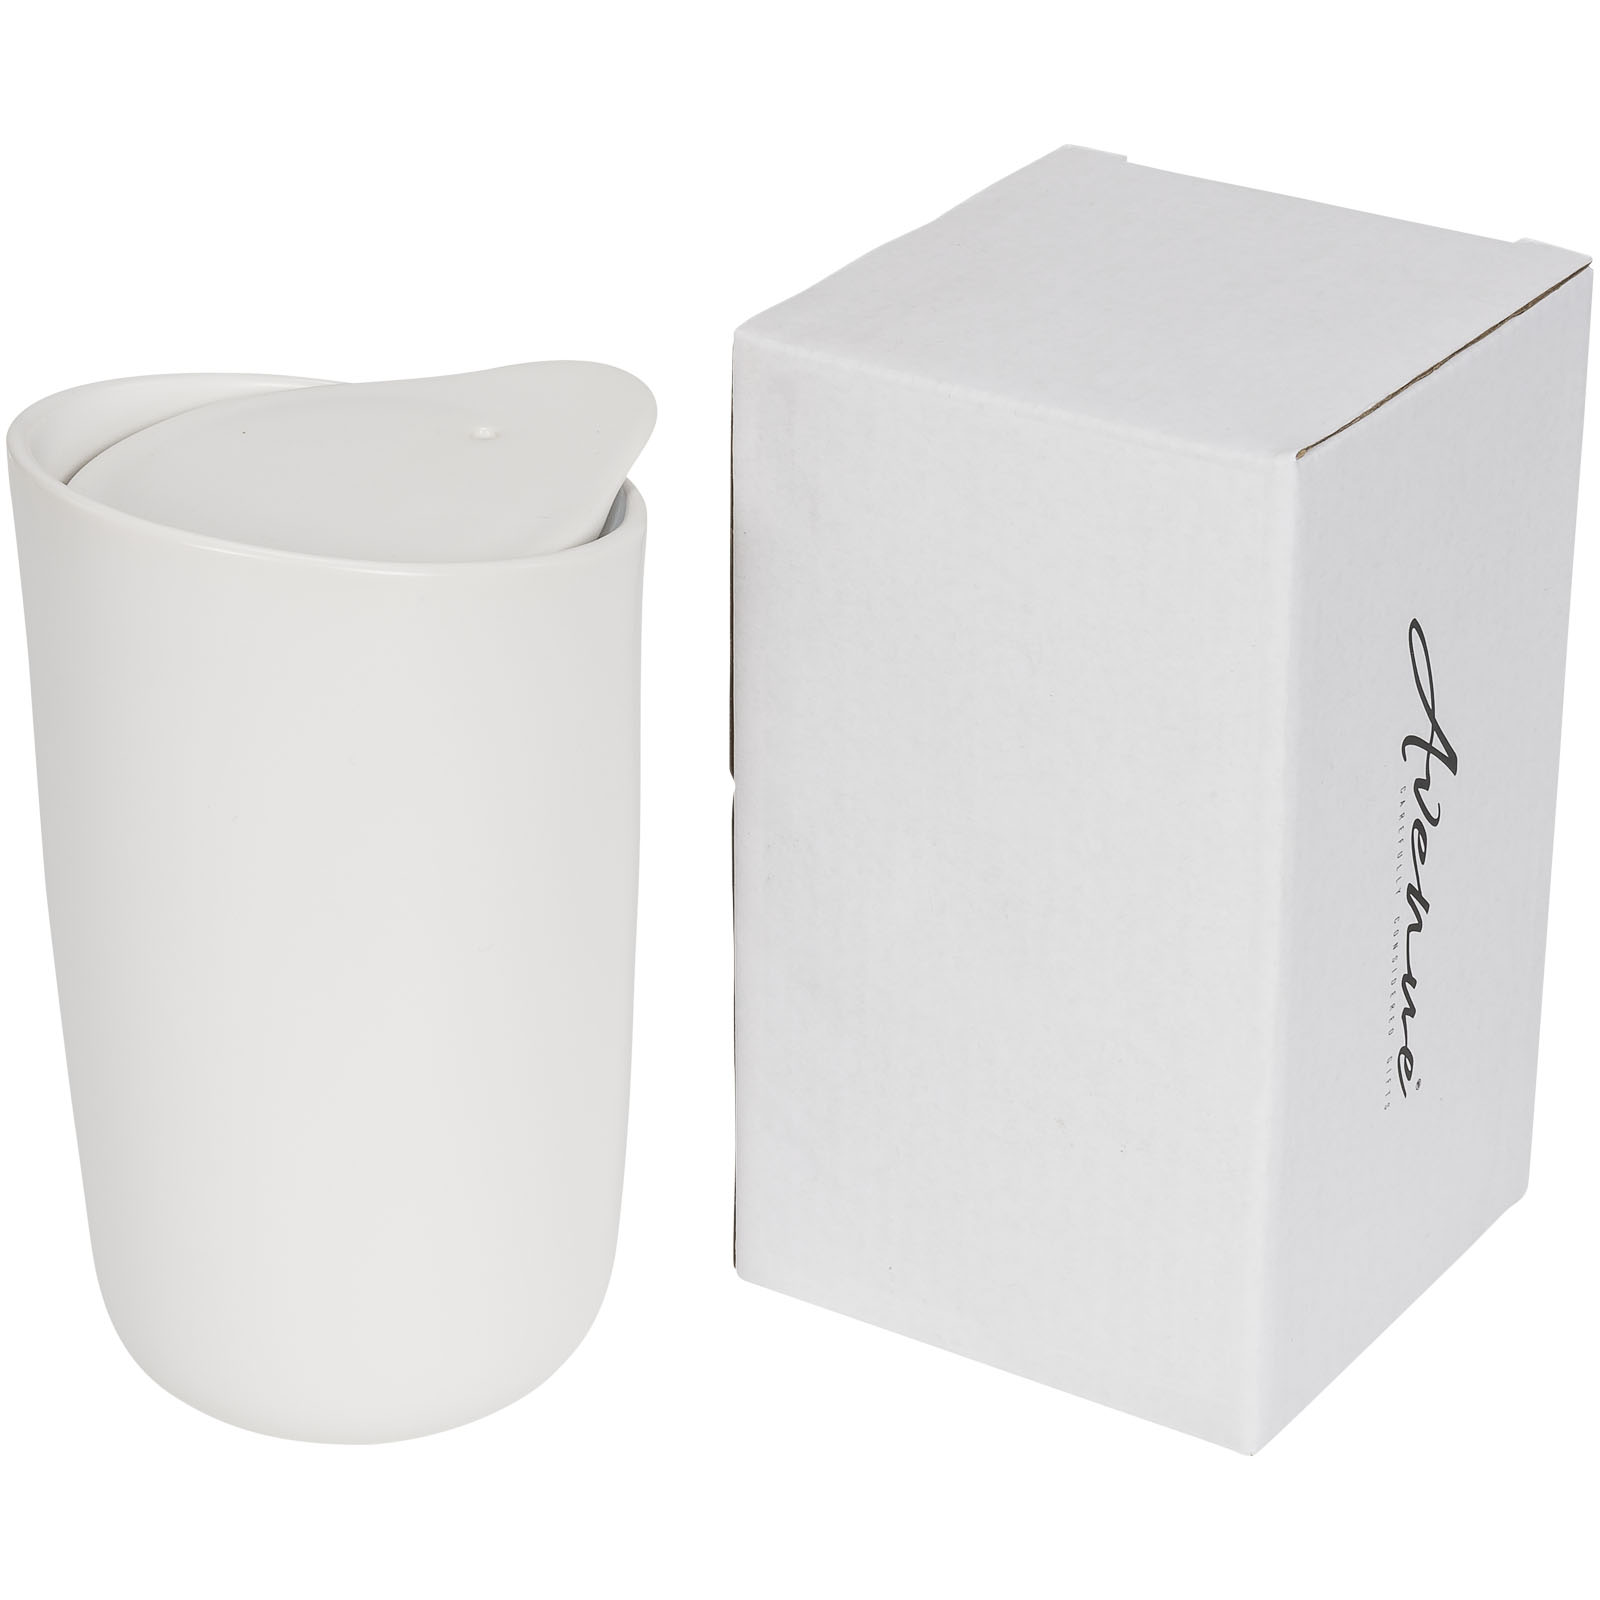 Travel mugs - Mysa 410 ml double-walled ceramic tumbler